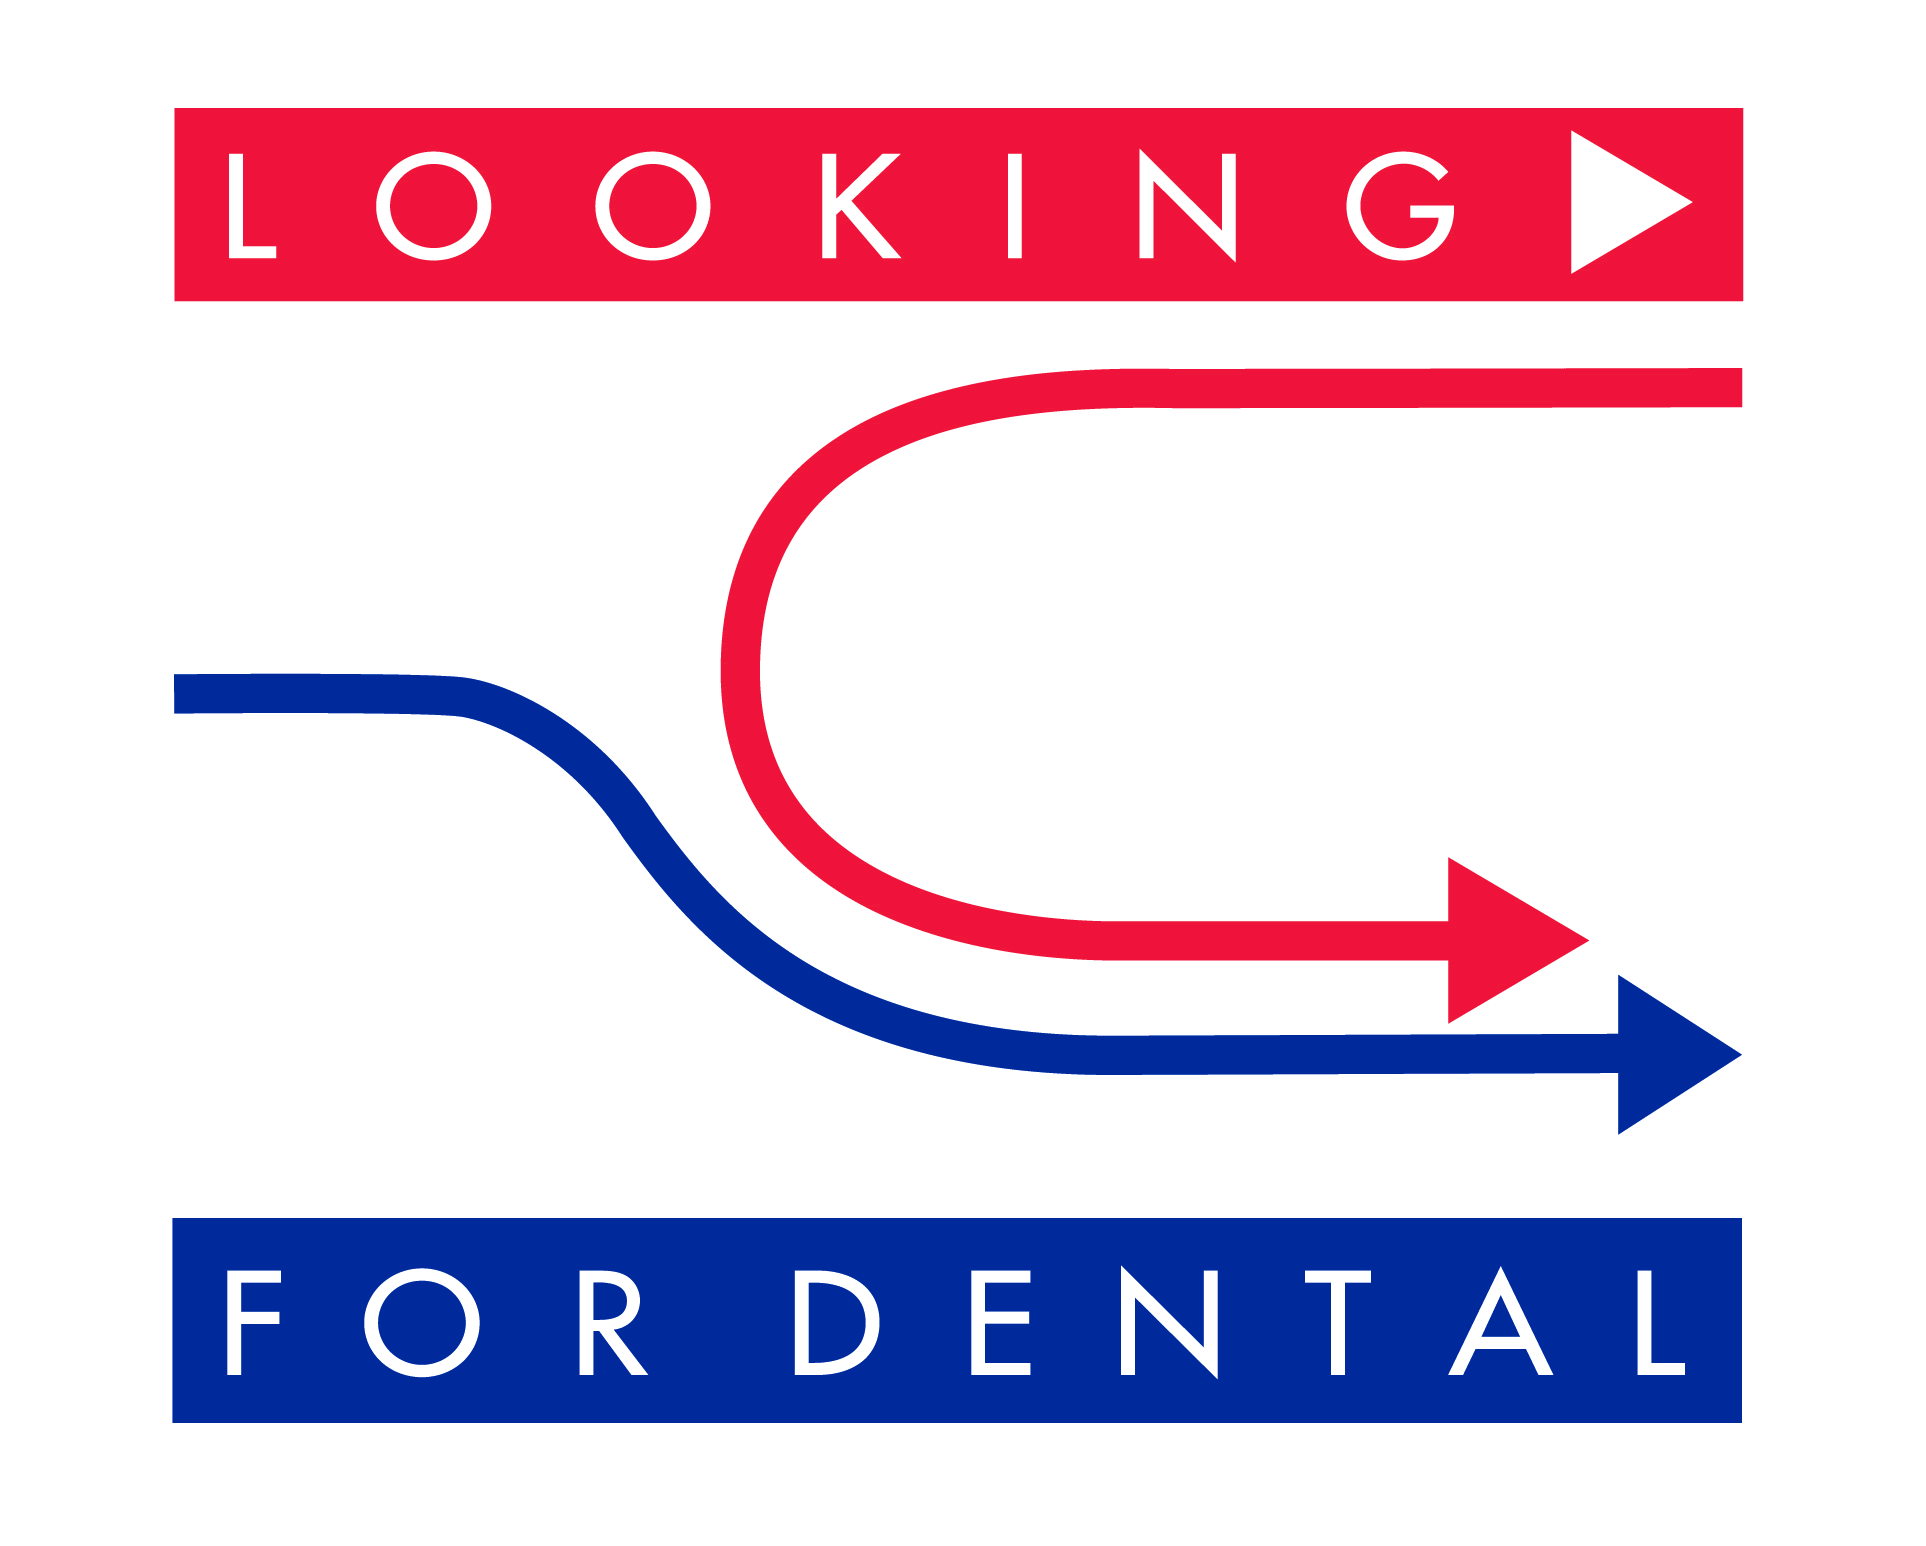 Wallpaper Dental And Dentist Banners Screensavers Desktop